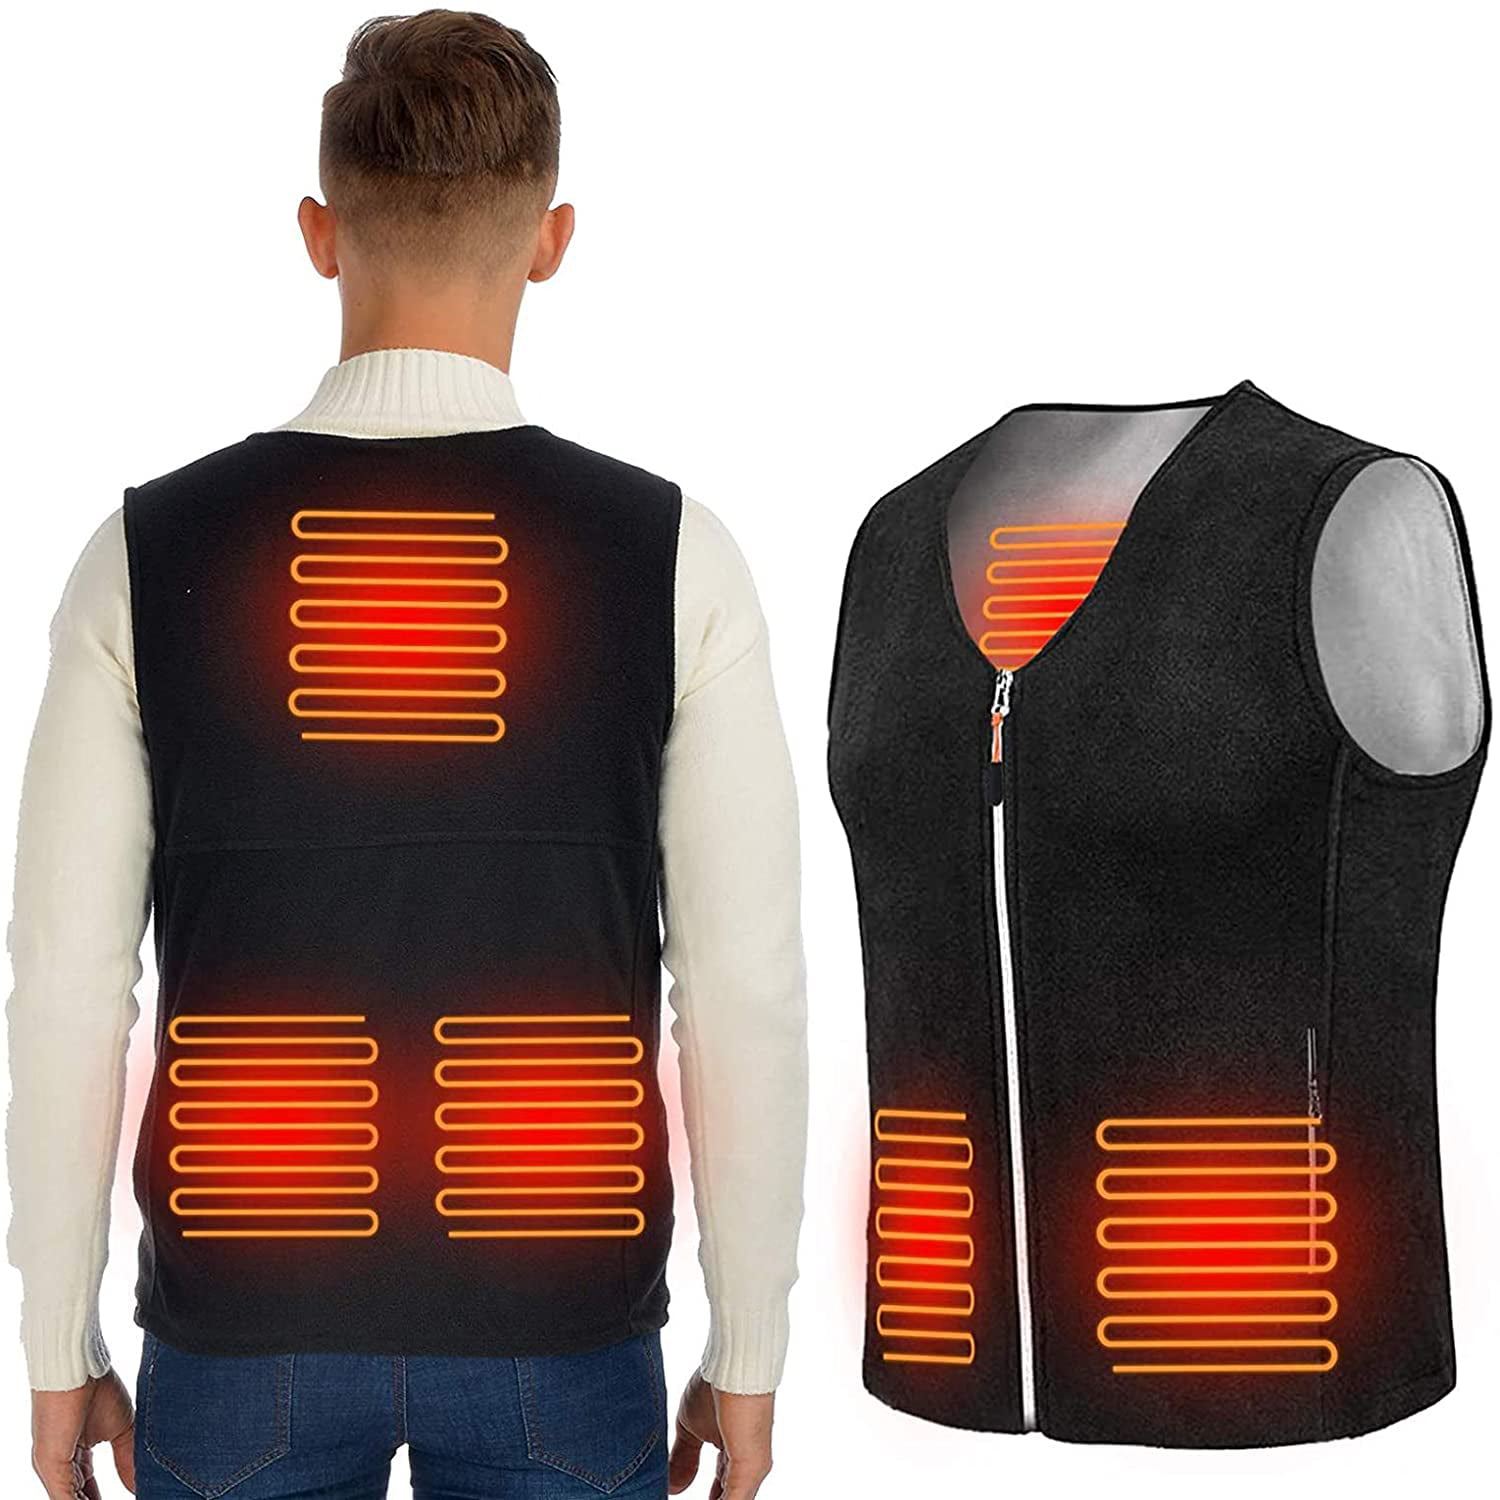 Hot Sale USB Sleeveless Heated Vest Motorcycle Power Bank Heated Vest 